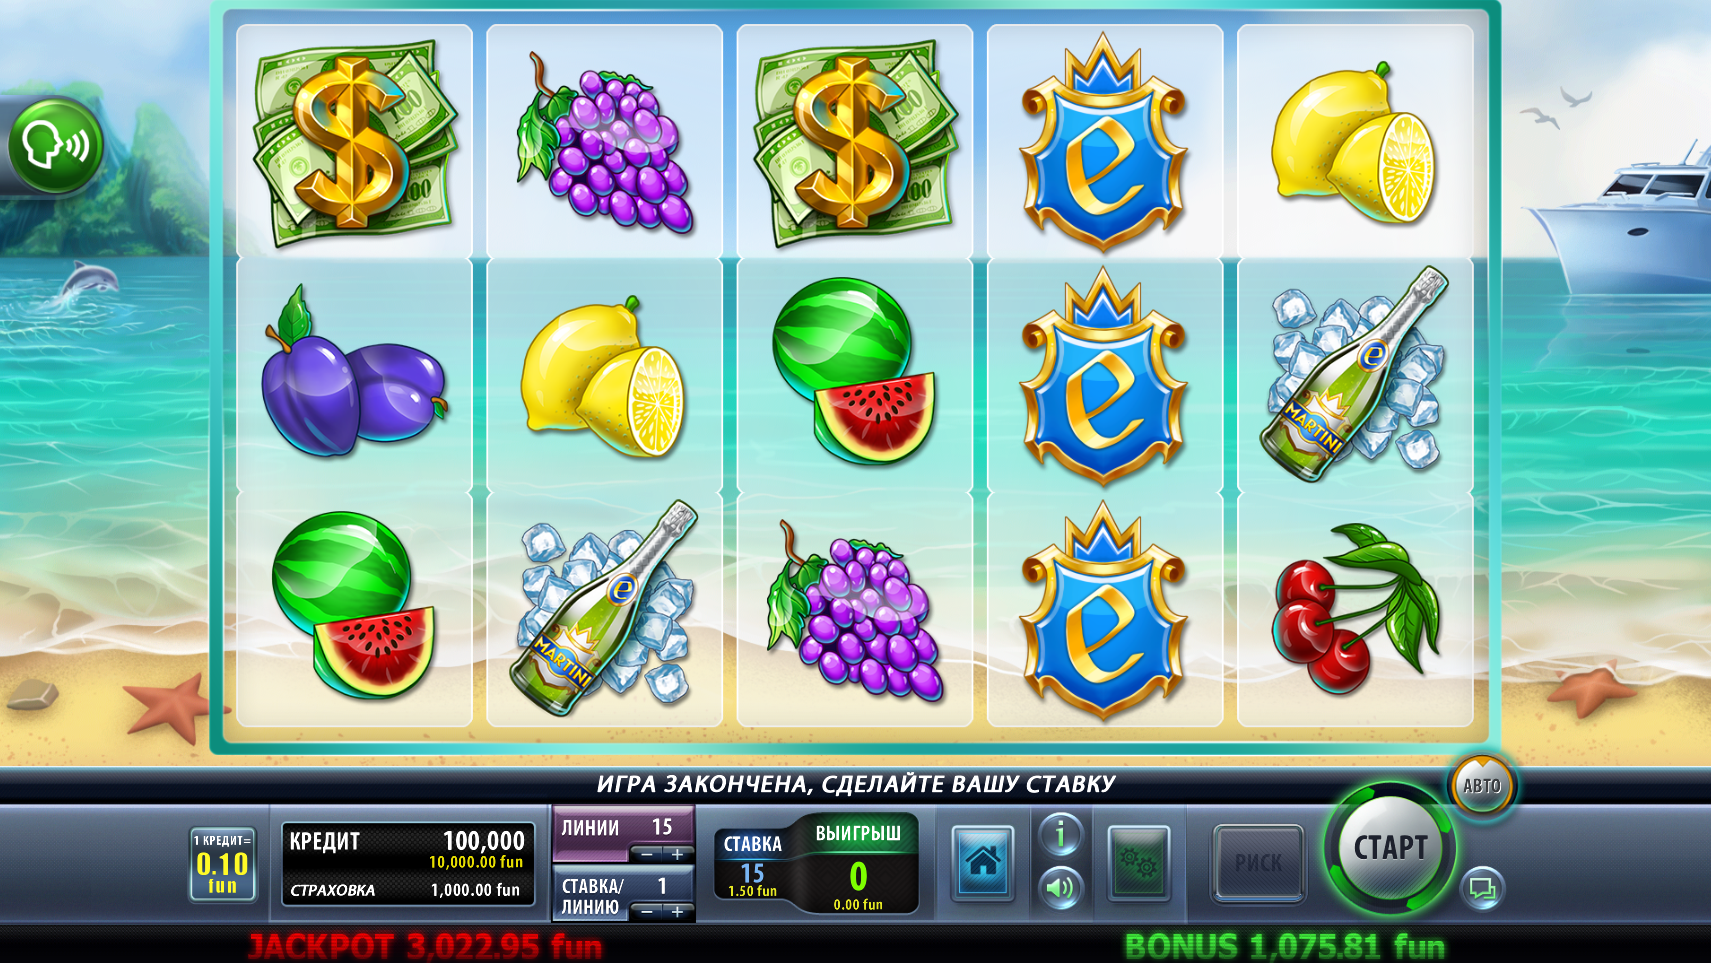 Champion casino slots